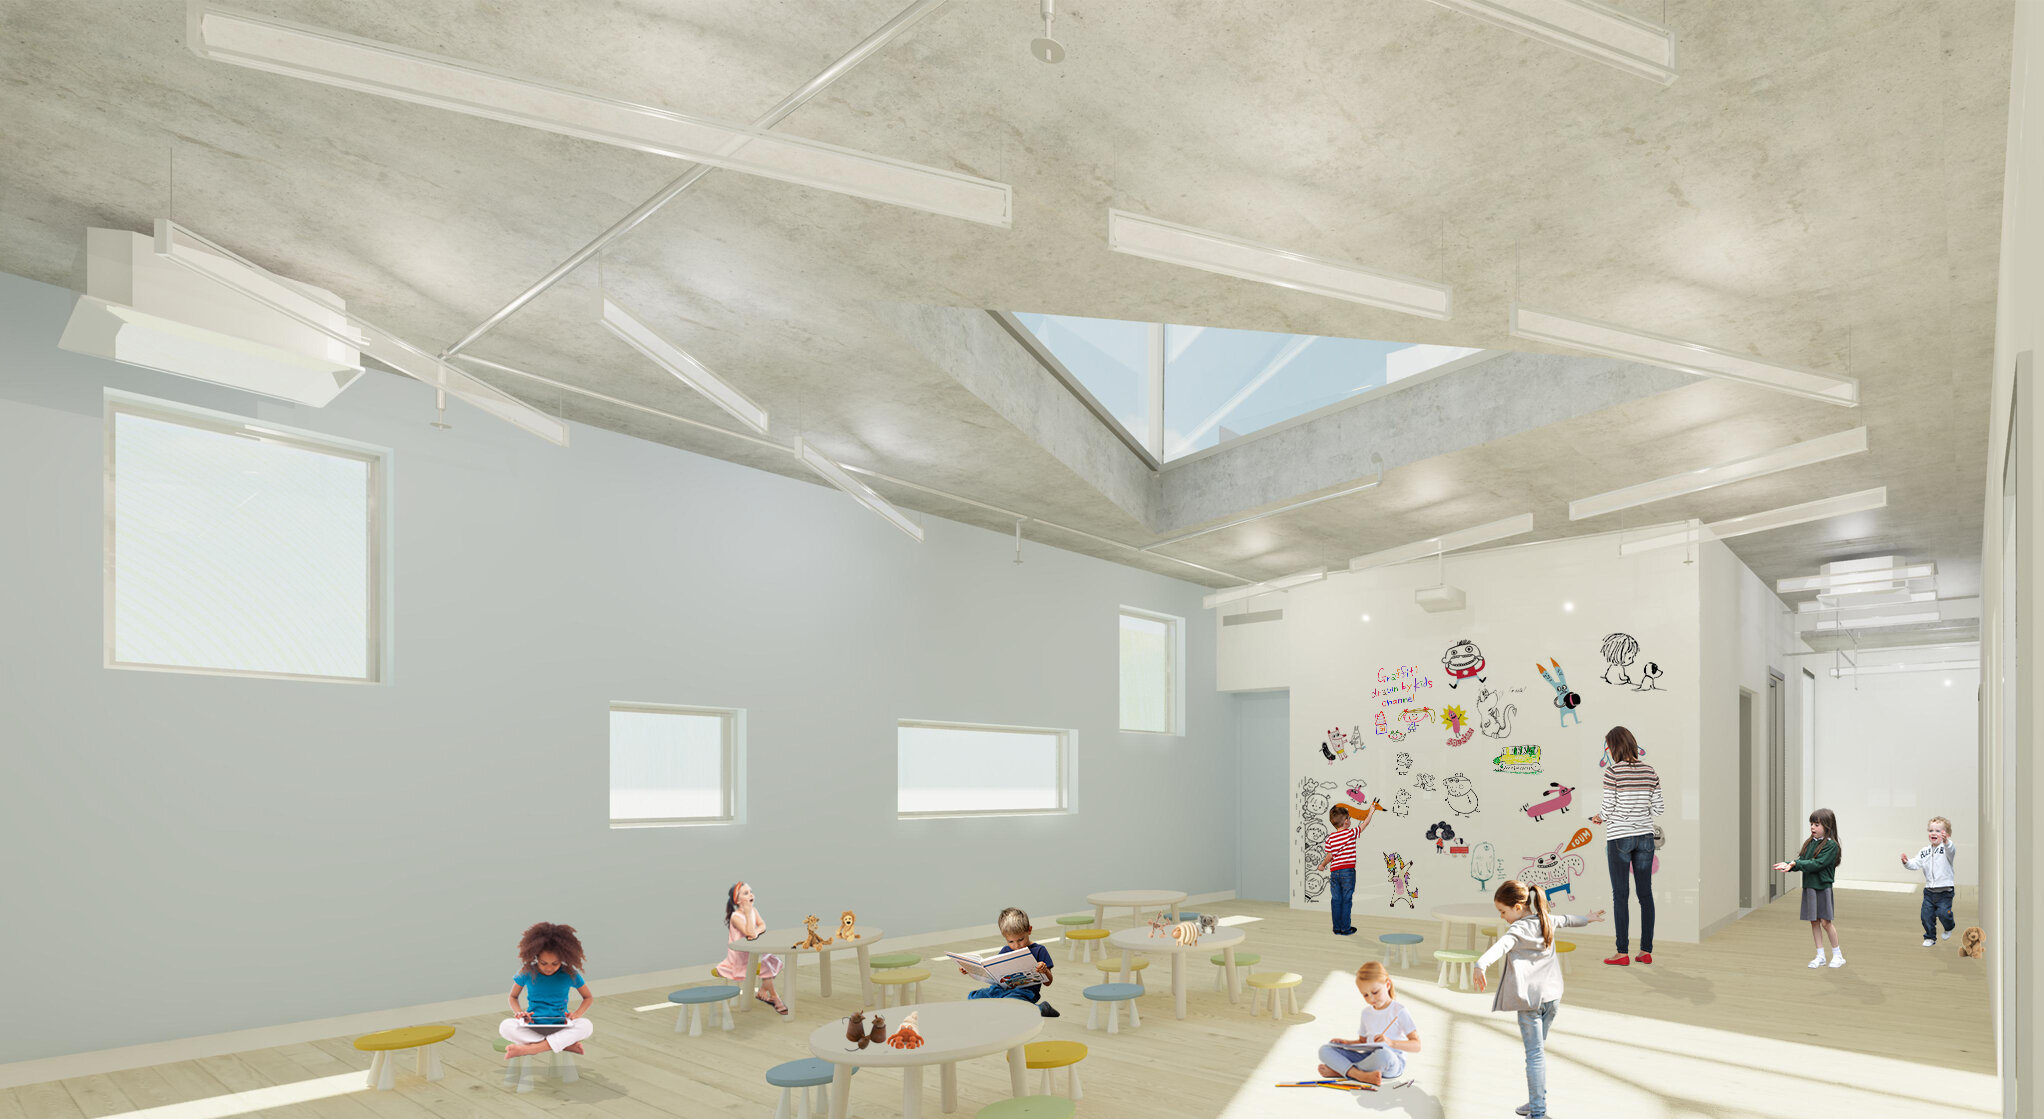 Classroom_Skylight render with wood flooring.jpg